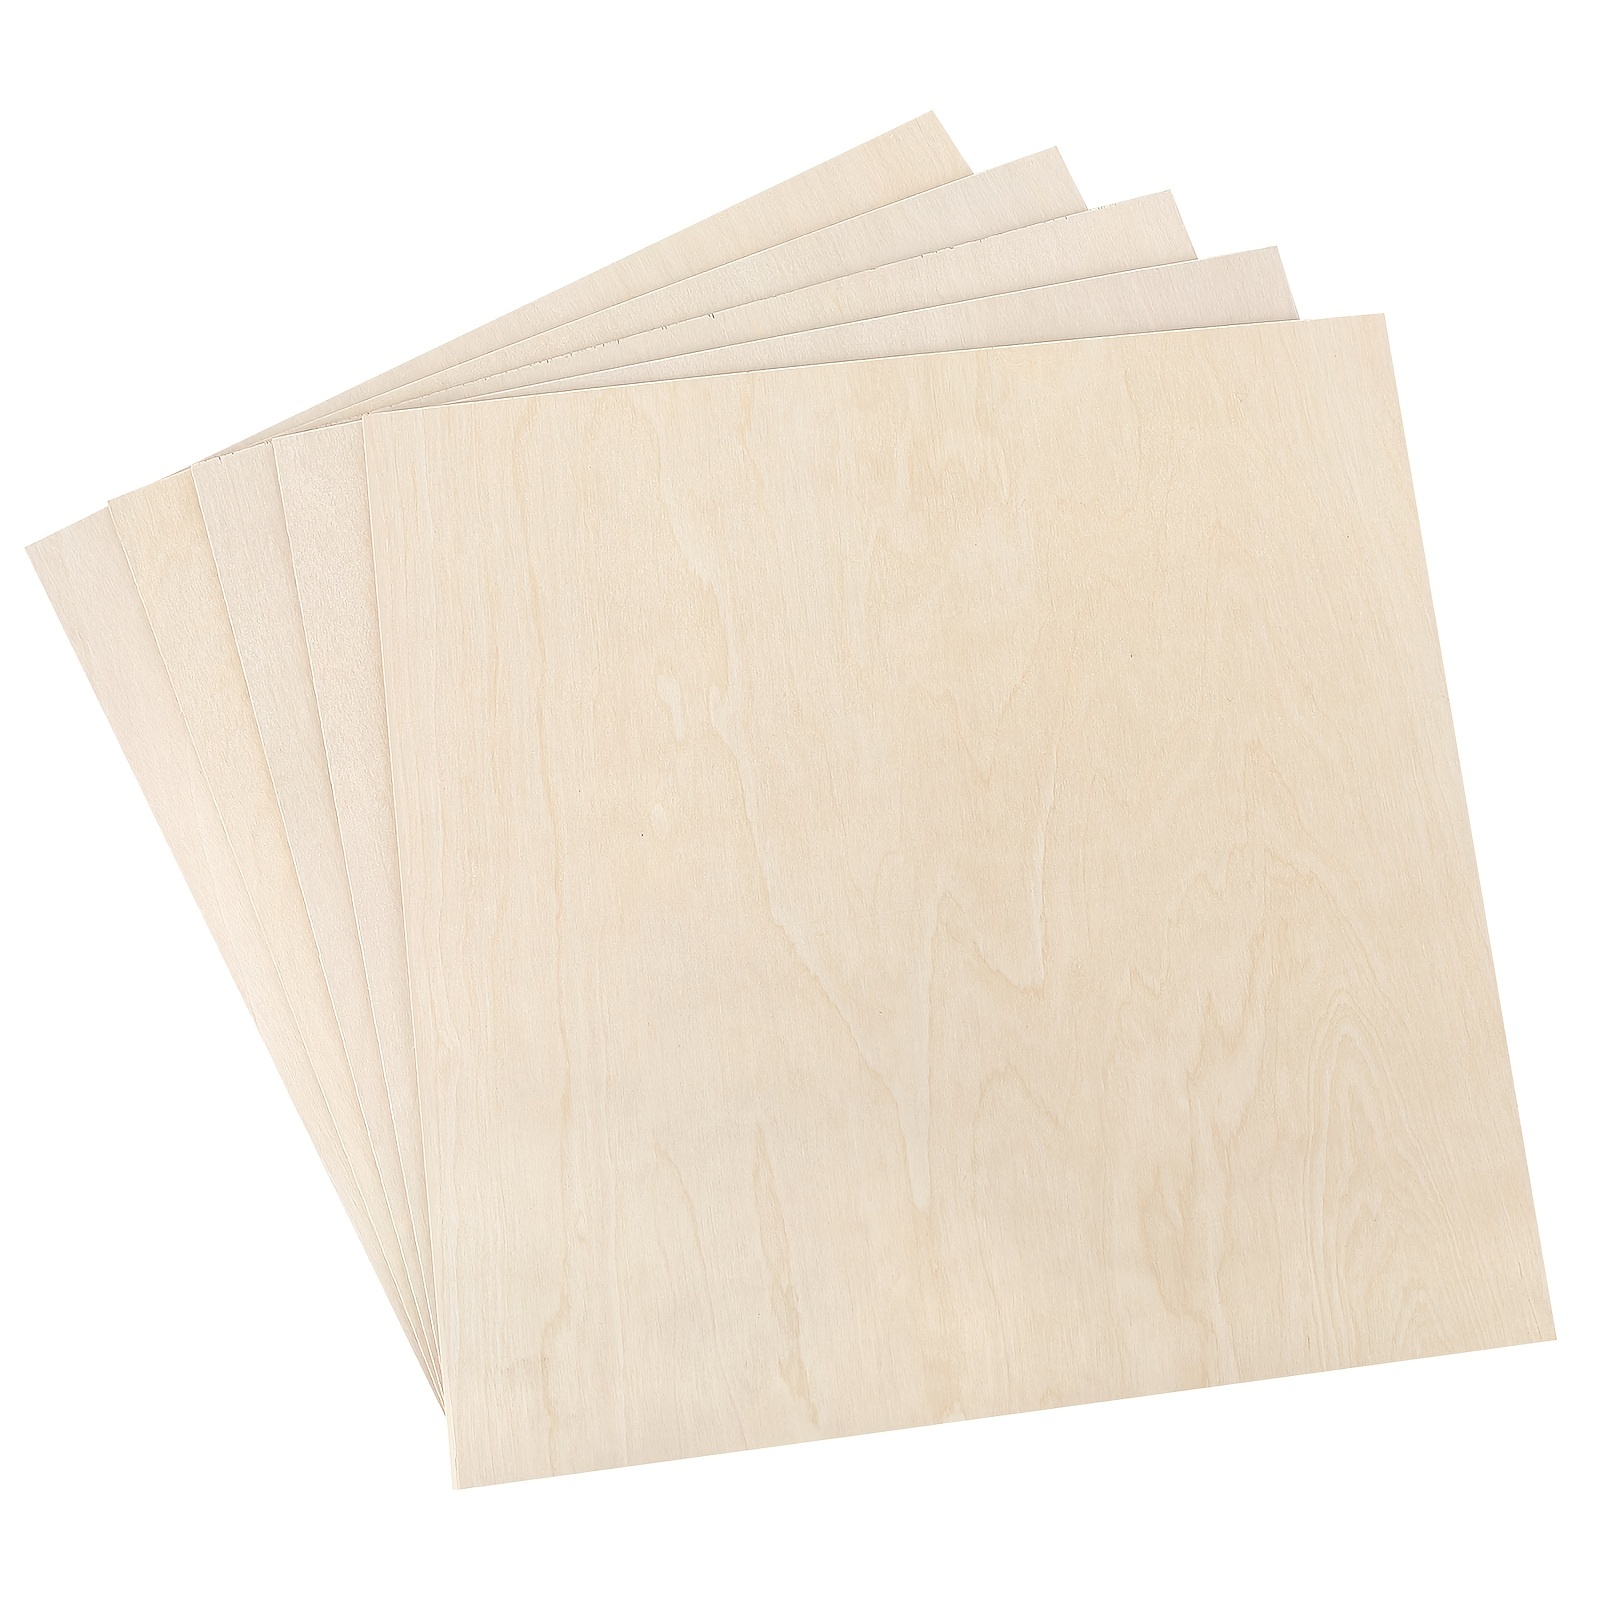 Dofiki 15 Pcs 1/8 Basswood Sheets 3mm Plywood 1/8 x11.8x 11.8 Balsa  Plywood for Laser Cutting Engraving Wood Burning Building Model, 1/8 Inch  300